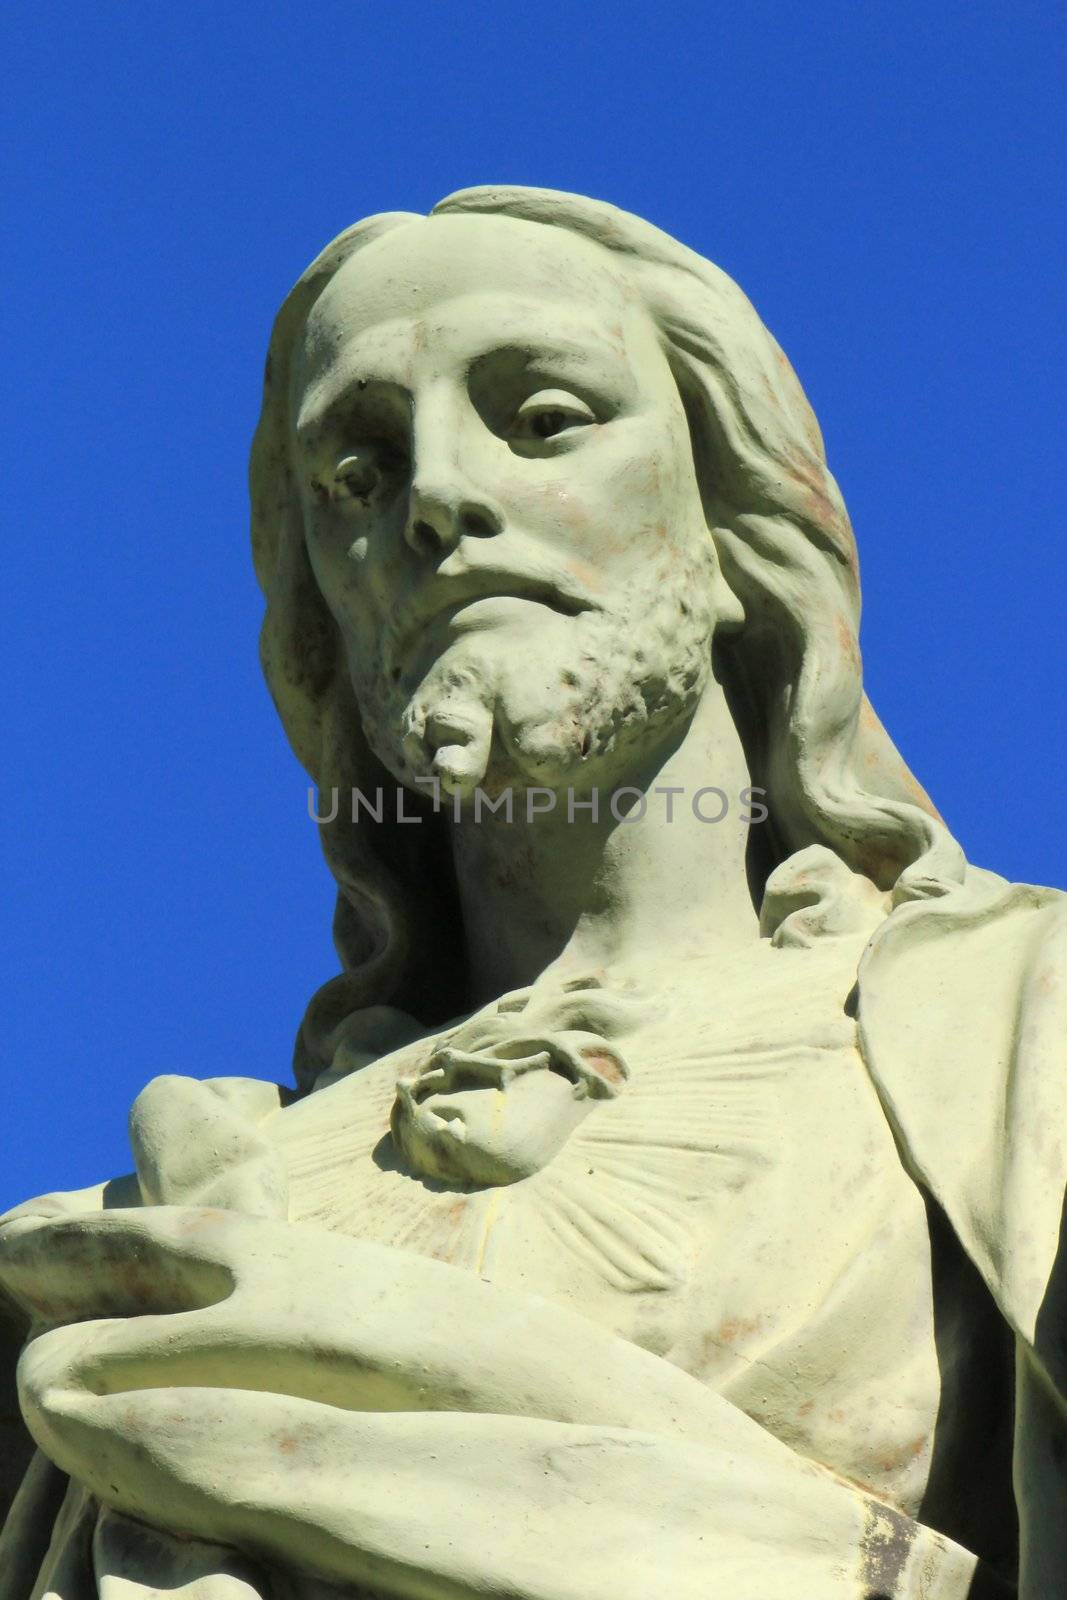 Close up of a white stone Jesus statue